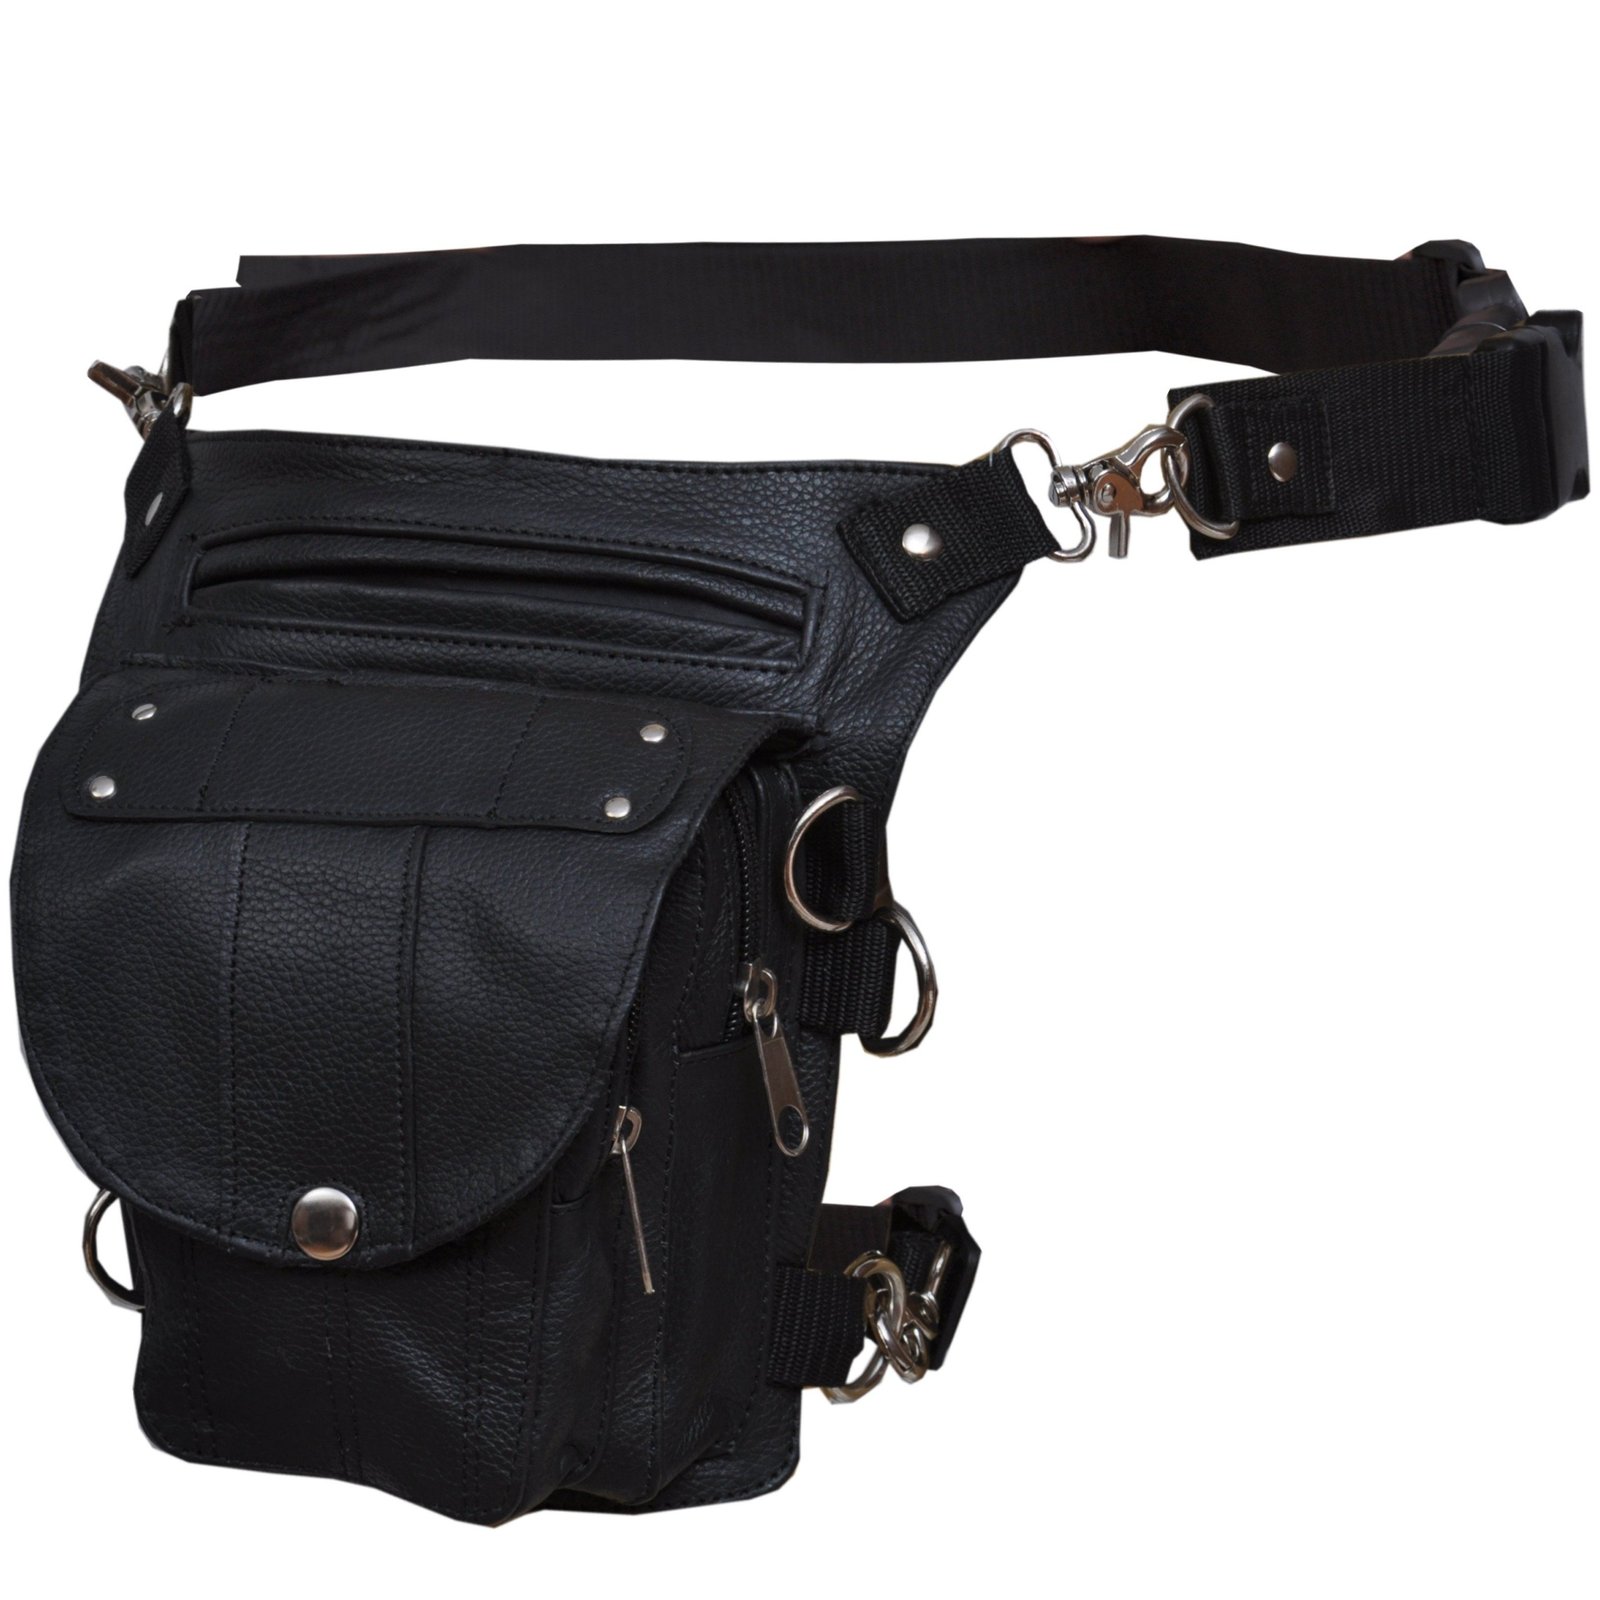 Leather Thigh Bags - Women's - Black - 2083-00-UN